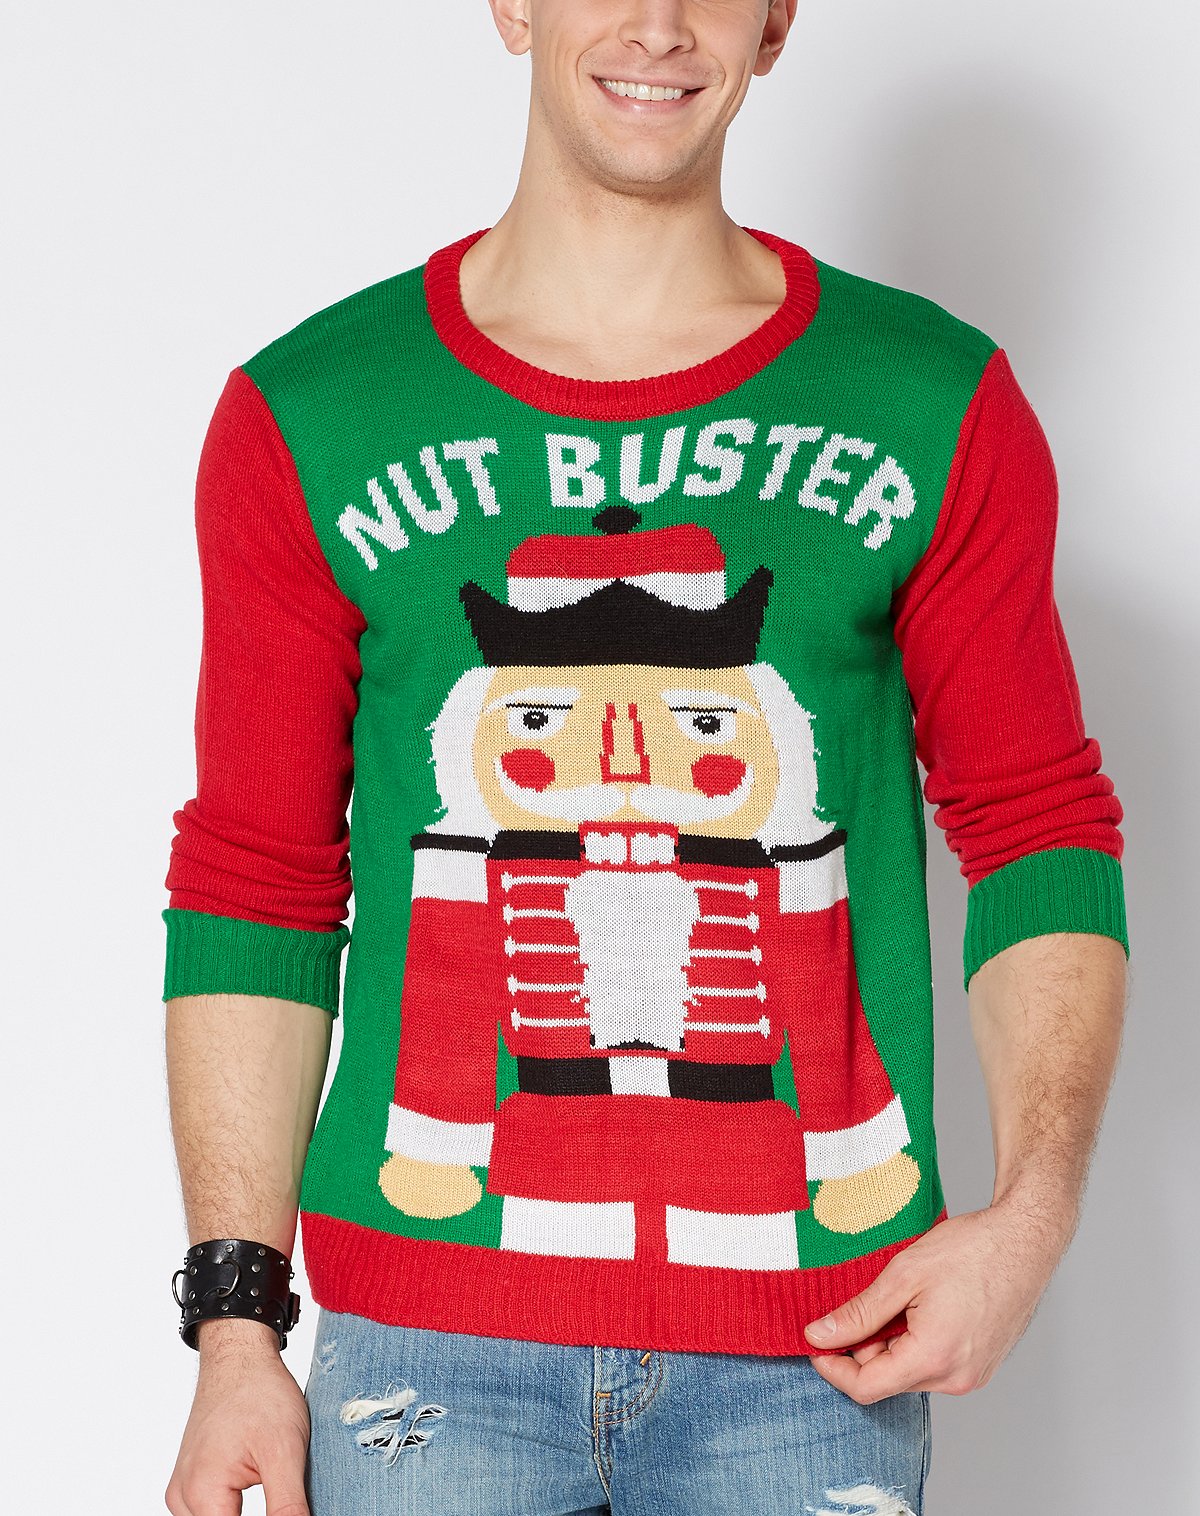 Spencer's Peek-A-Boob Reindeer Ugly Christmas Sweater